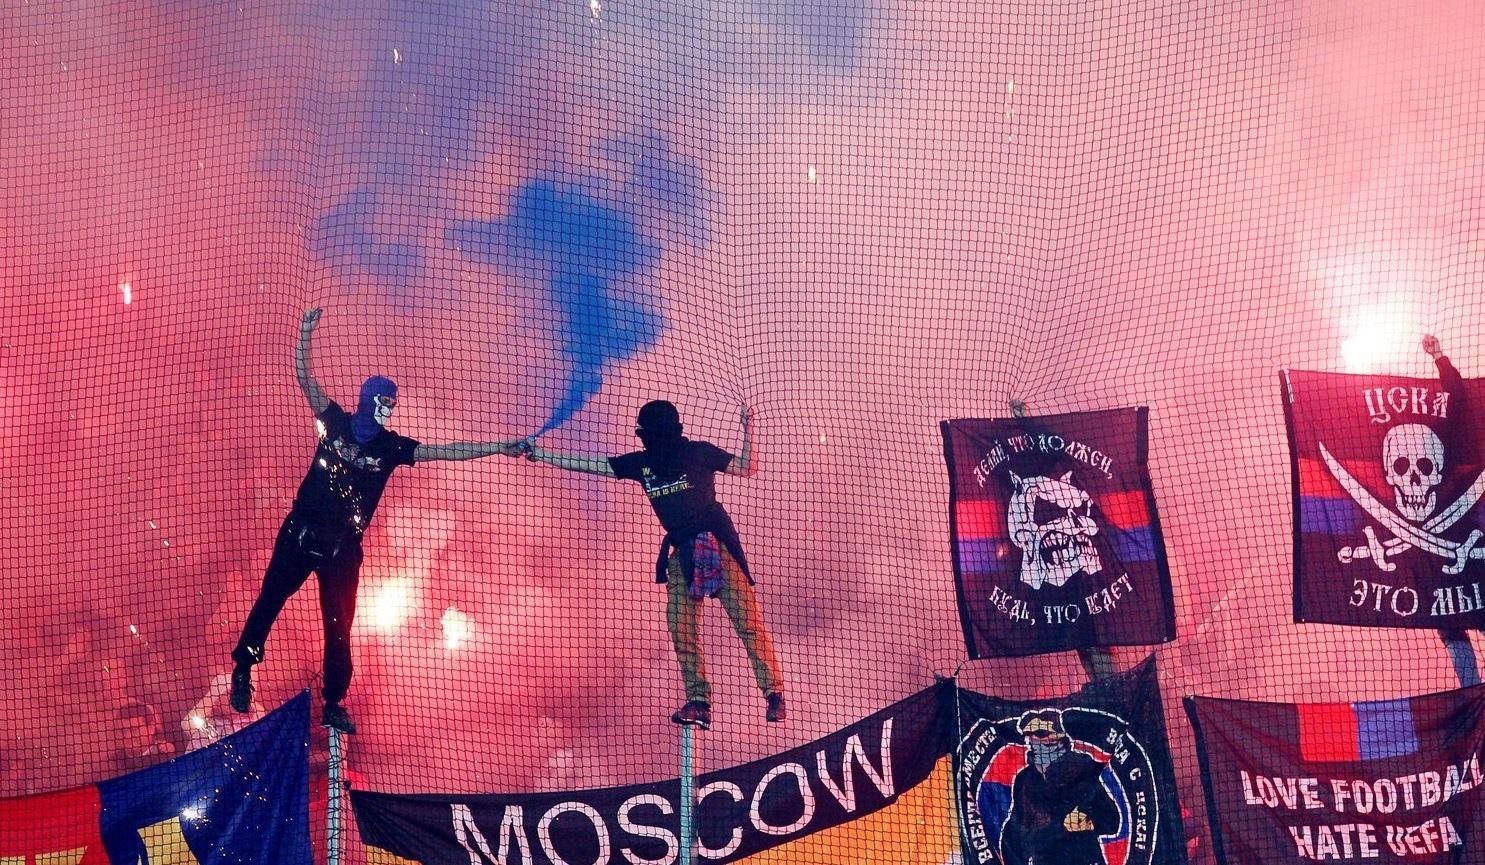 CSKA Moscow – CSKA Fans Against Racism